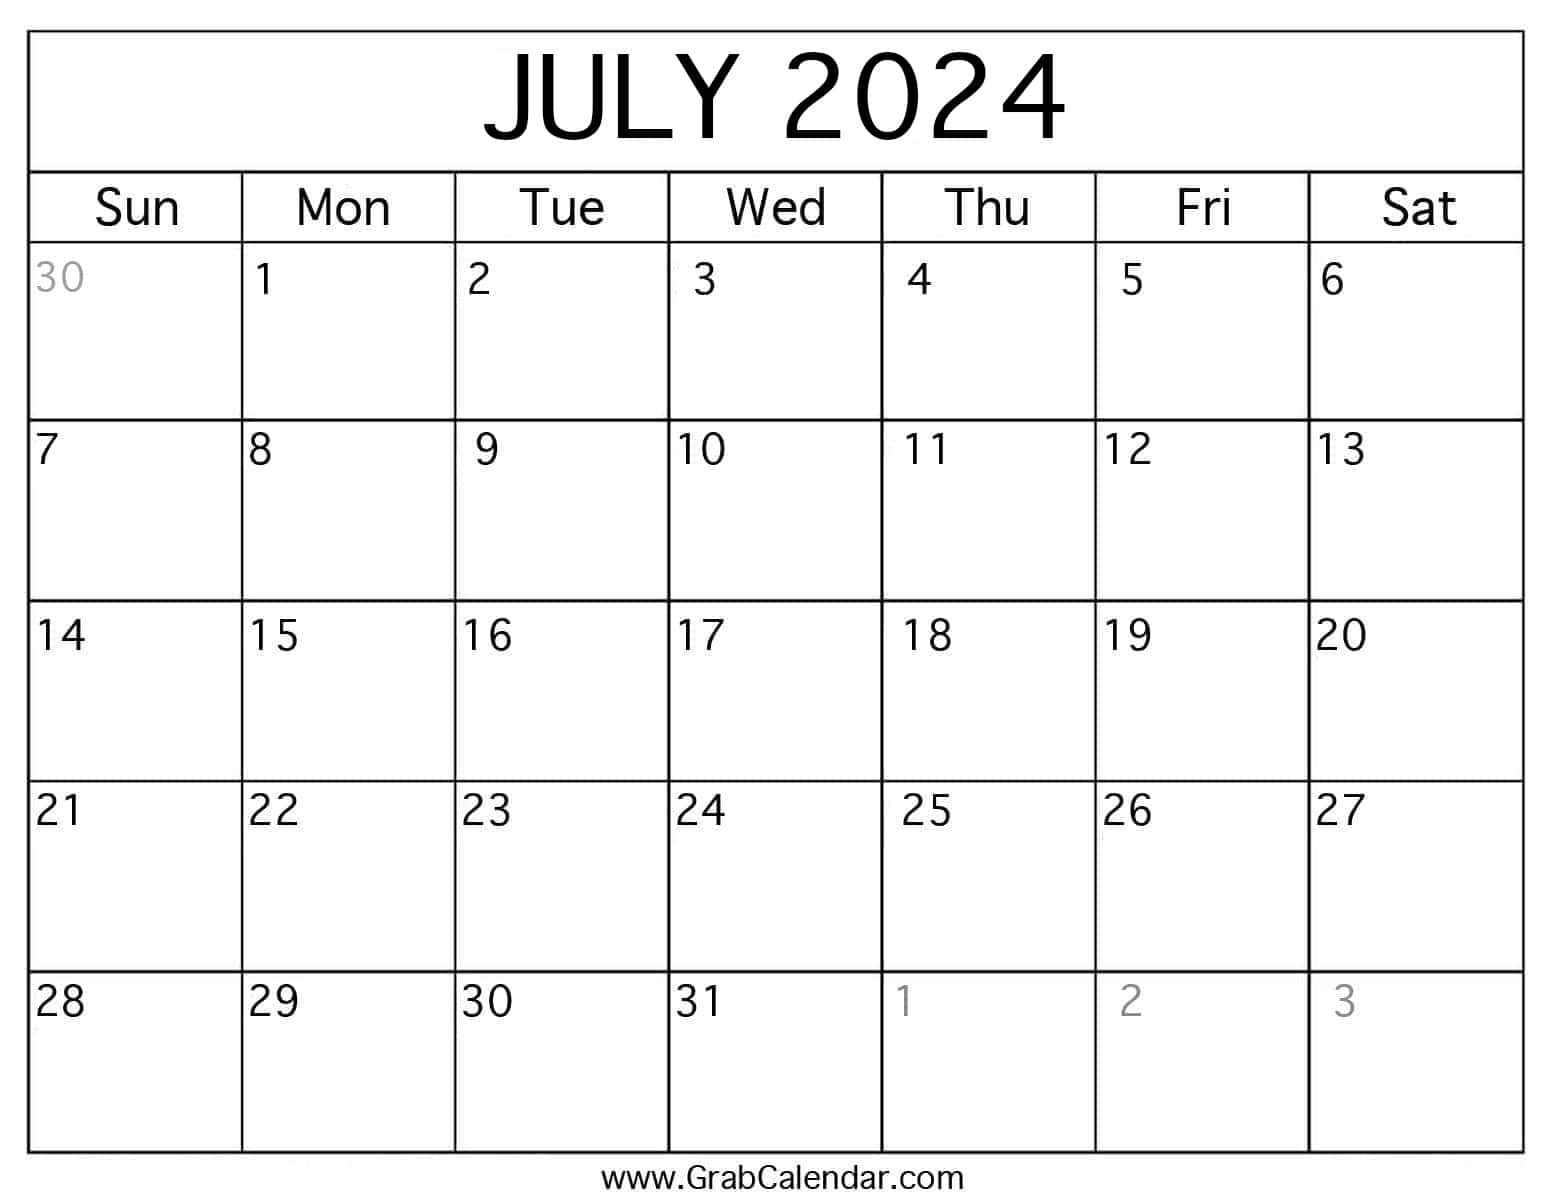 Printable July 2024 Calendar | Give Me The Calendar For July 2024